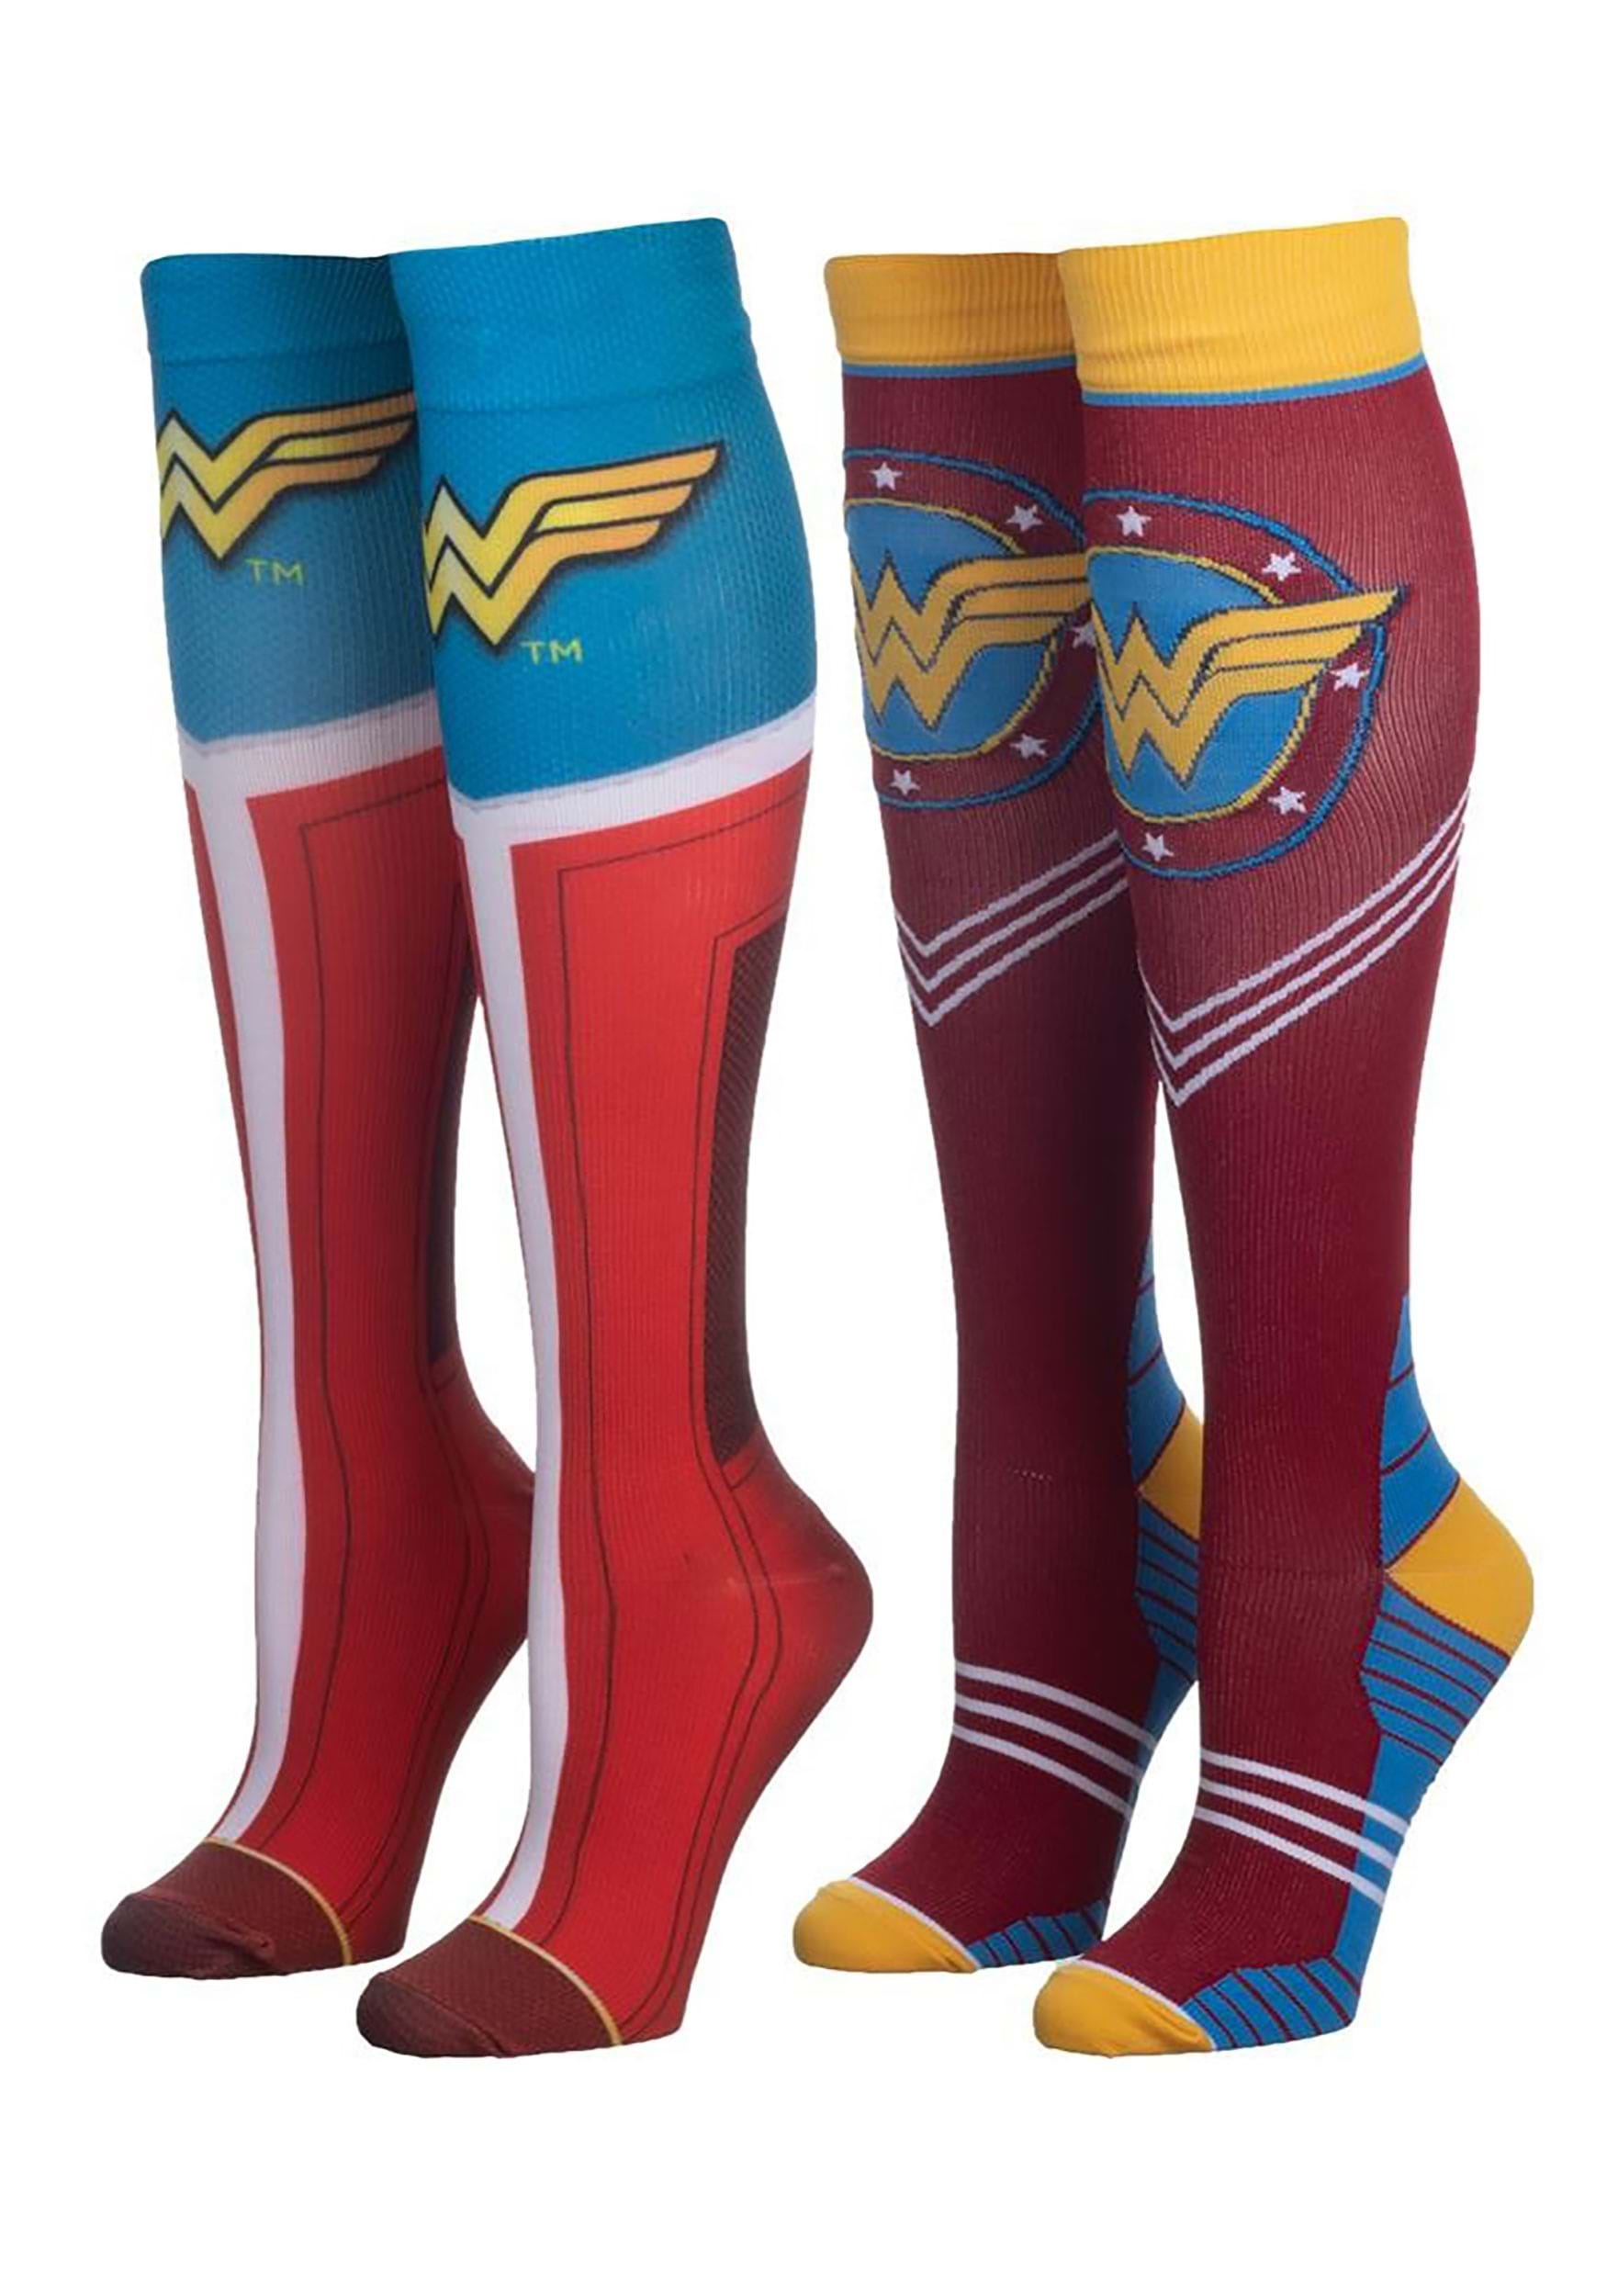 2 Pair Pack Compression Socks Wonder Woman